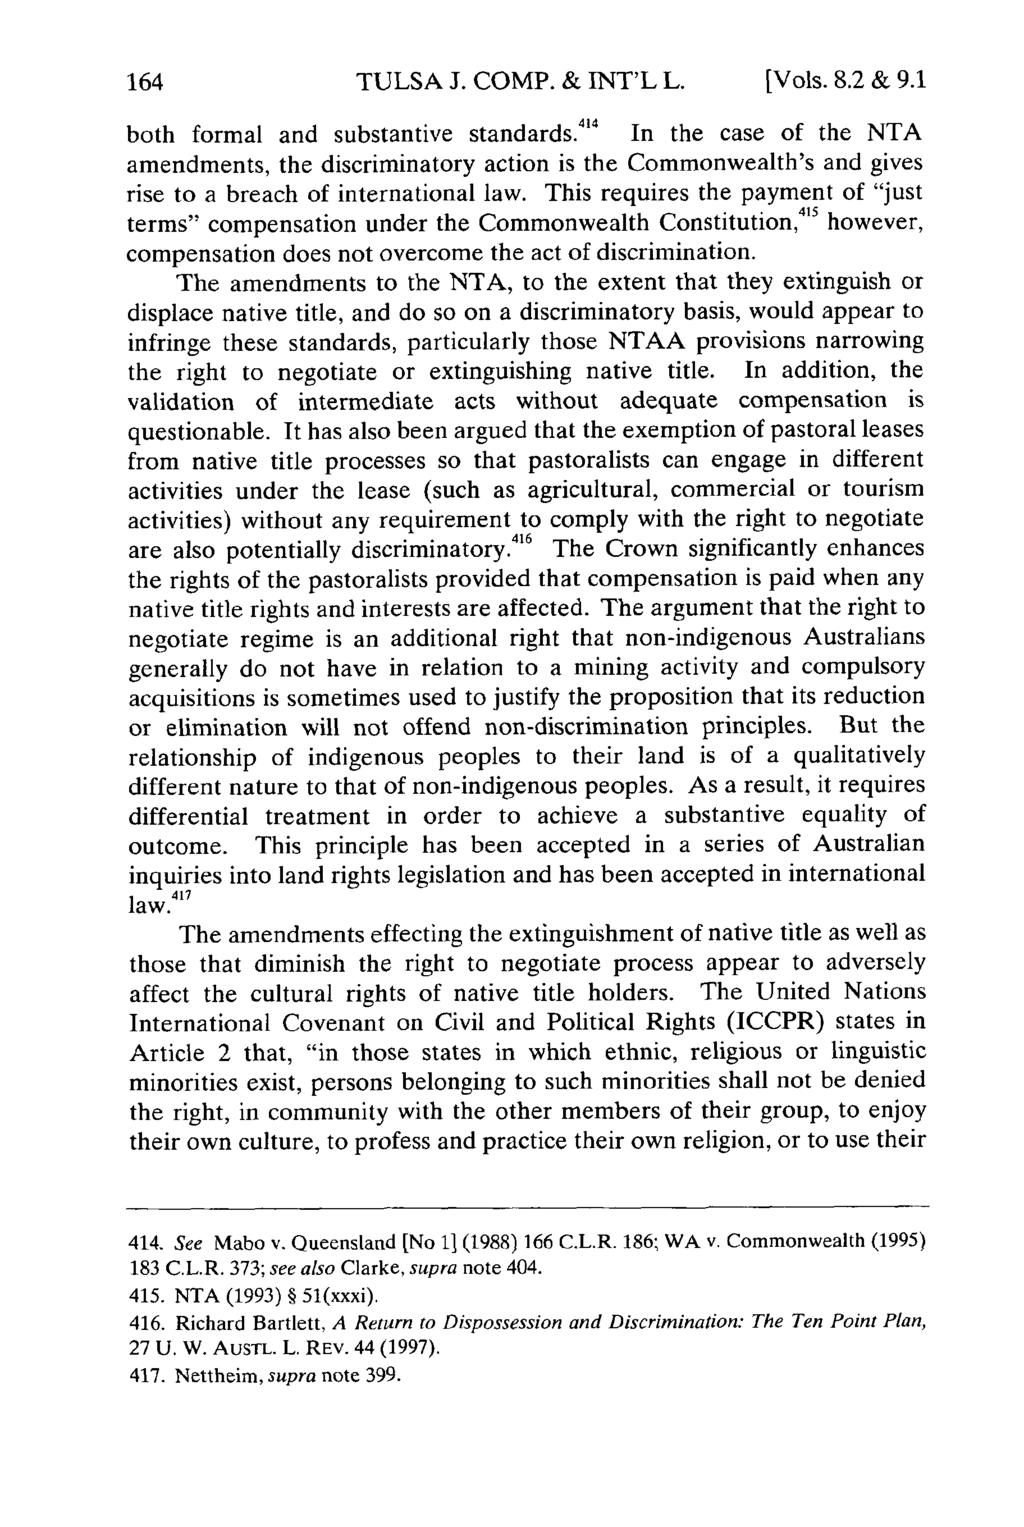 TULSA J. COMP. & INT'L L. [Vols. 8.2 & 9.1 both formal and substantive standards.